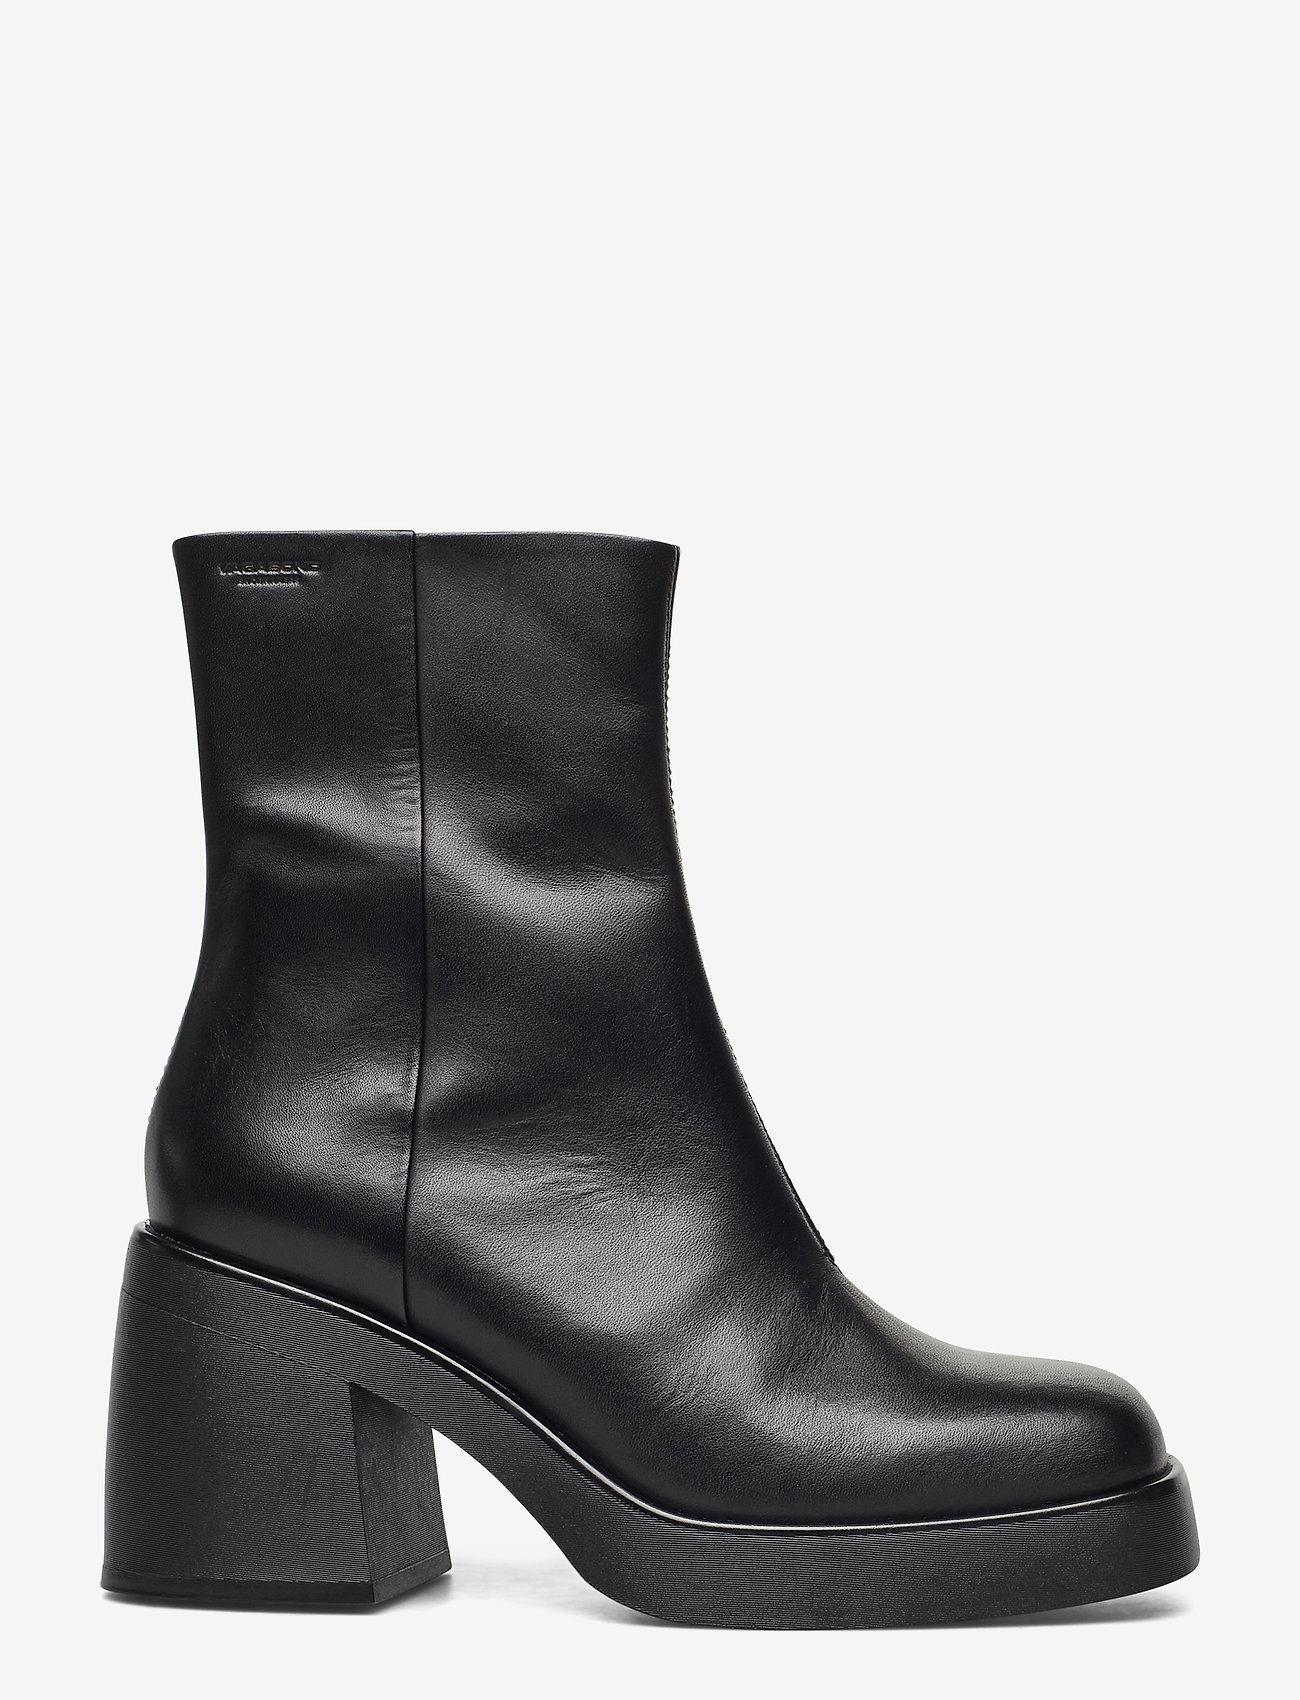 VAGABOND - BROOKE - high heel - black - 1